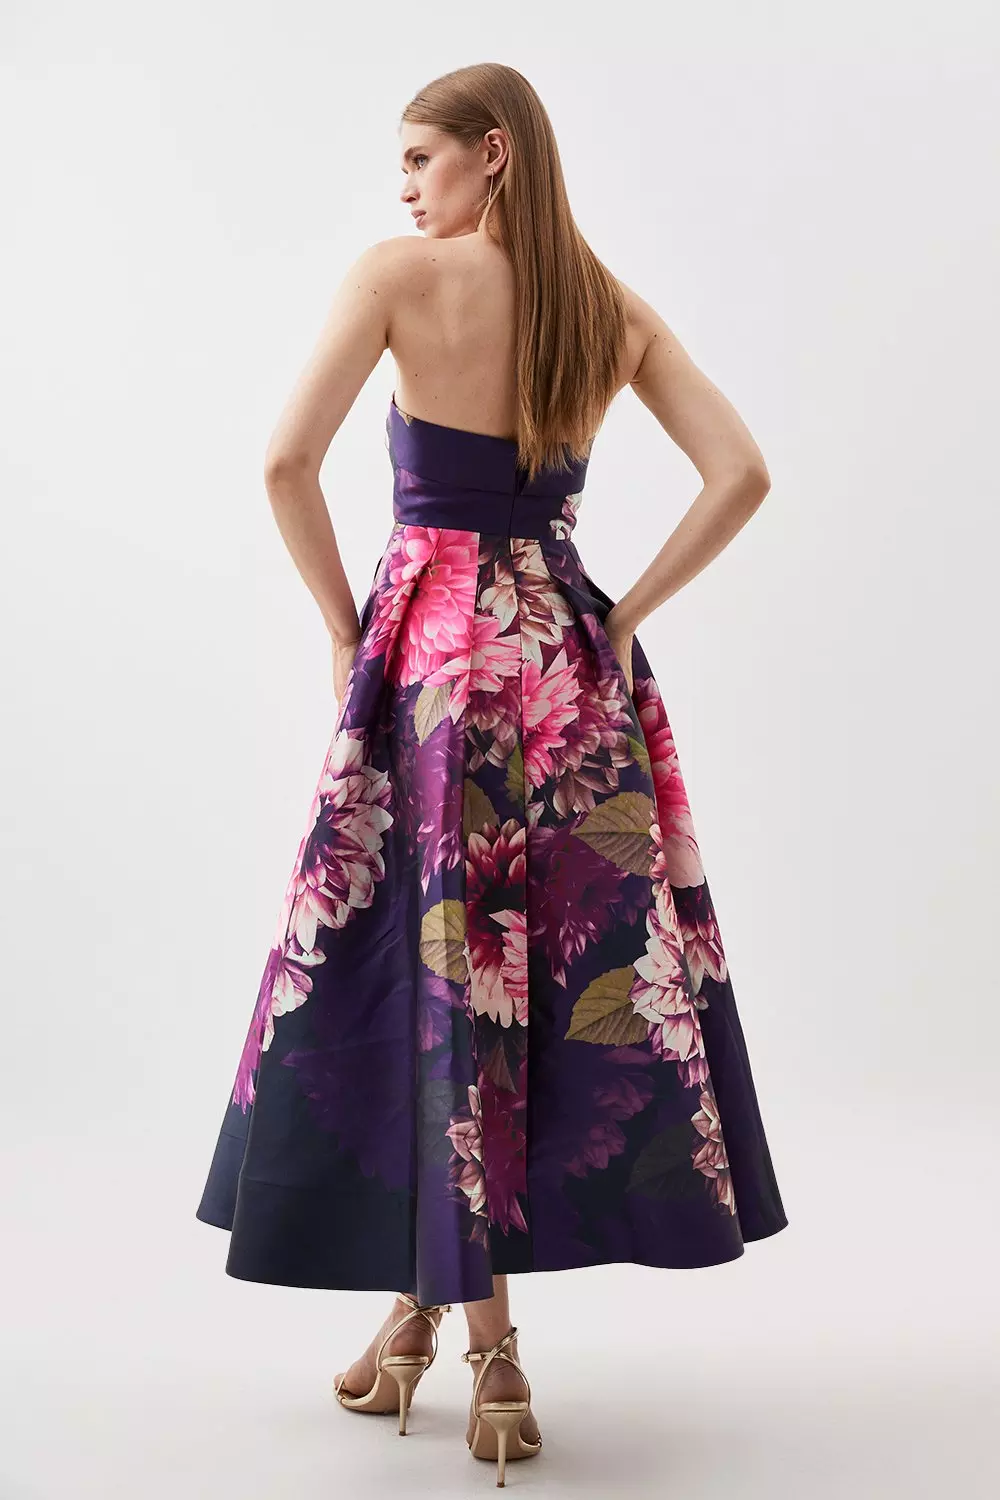 Exploding Floral Split Front Millen Karen Midaxi | Prom Dress